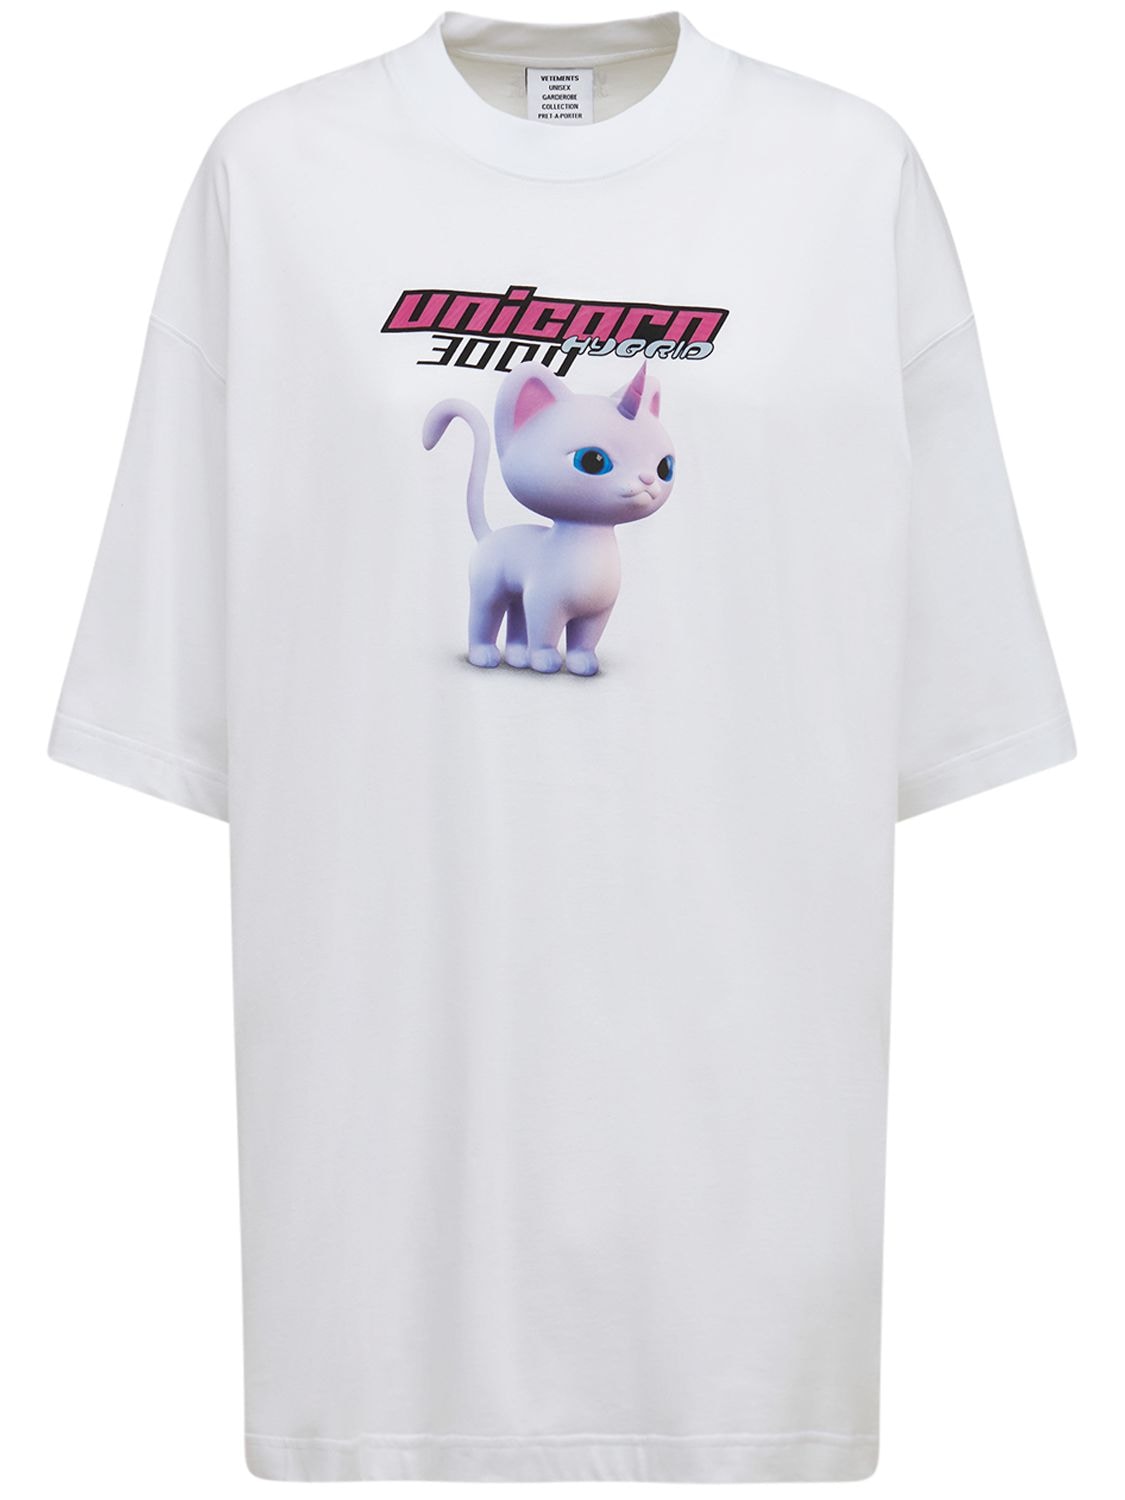 Cotton Everyone Can Be A Unicorn T-shirt